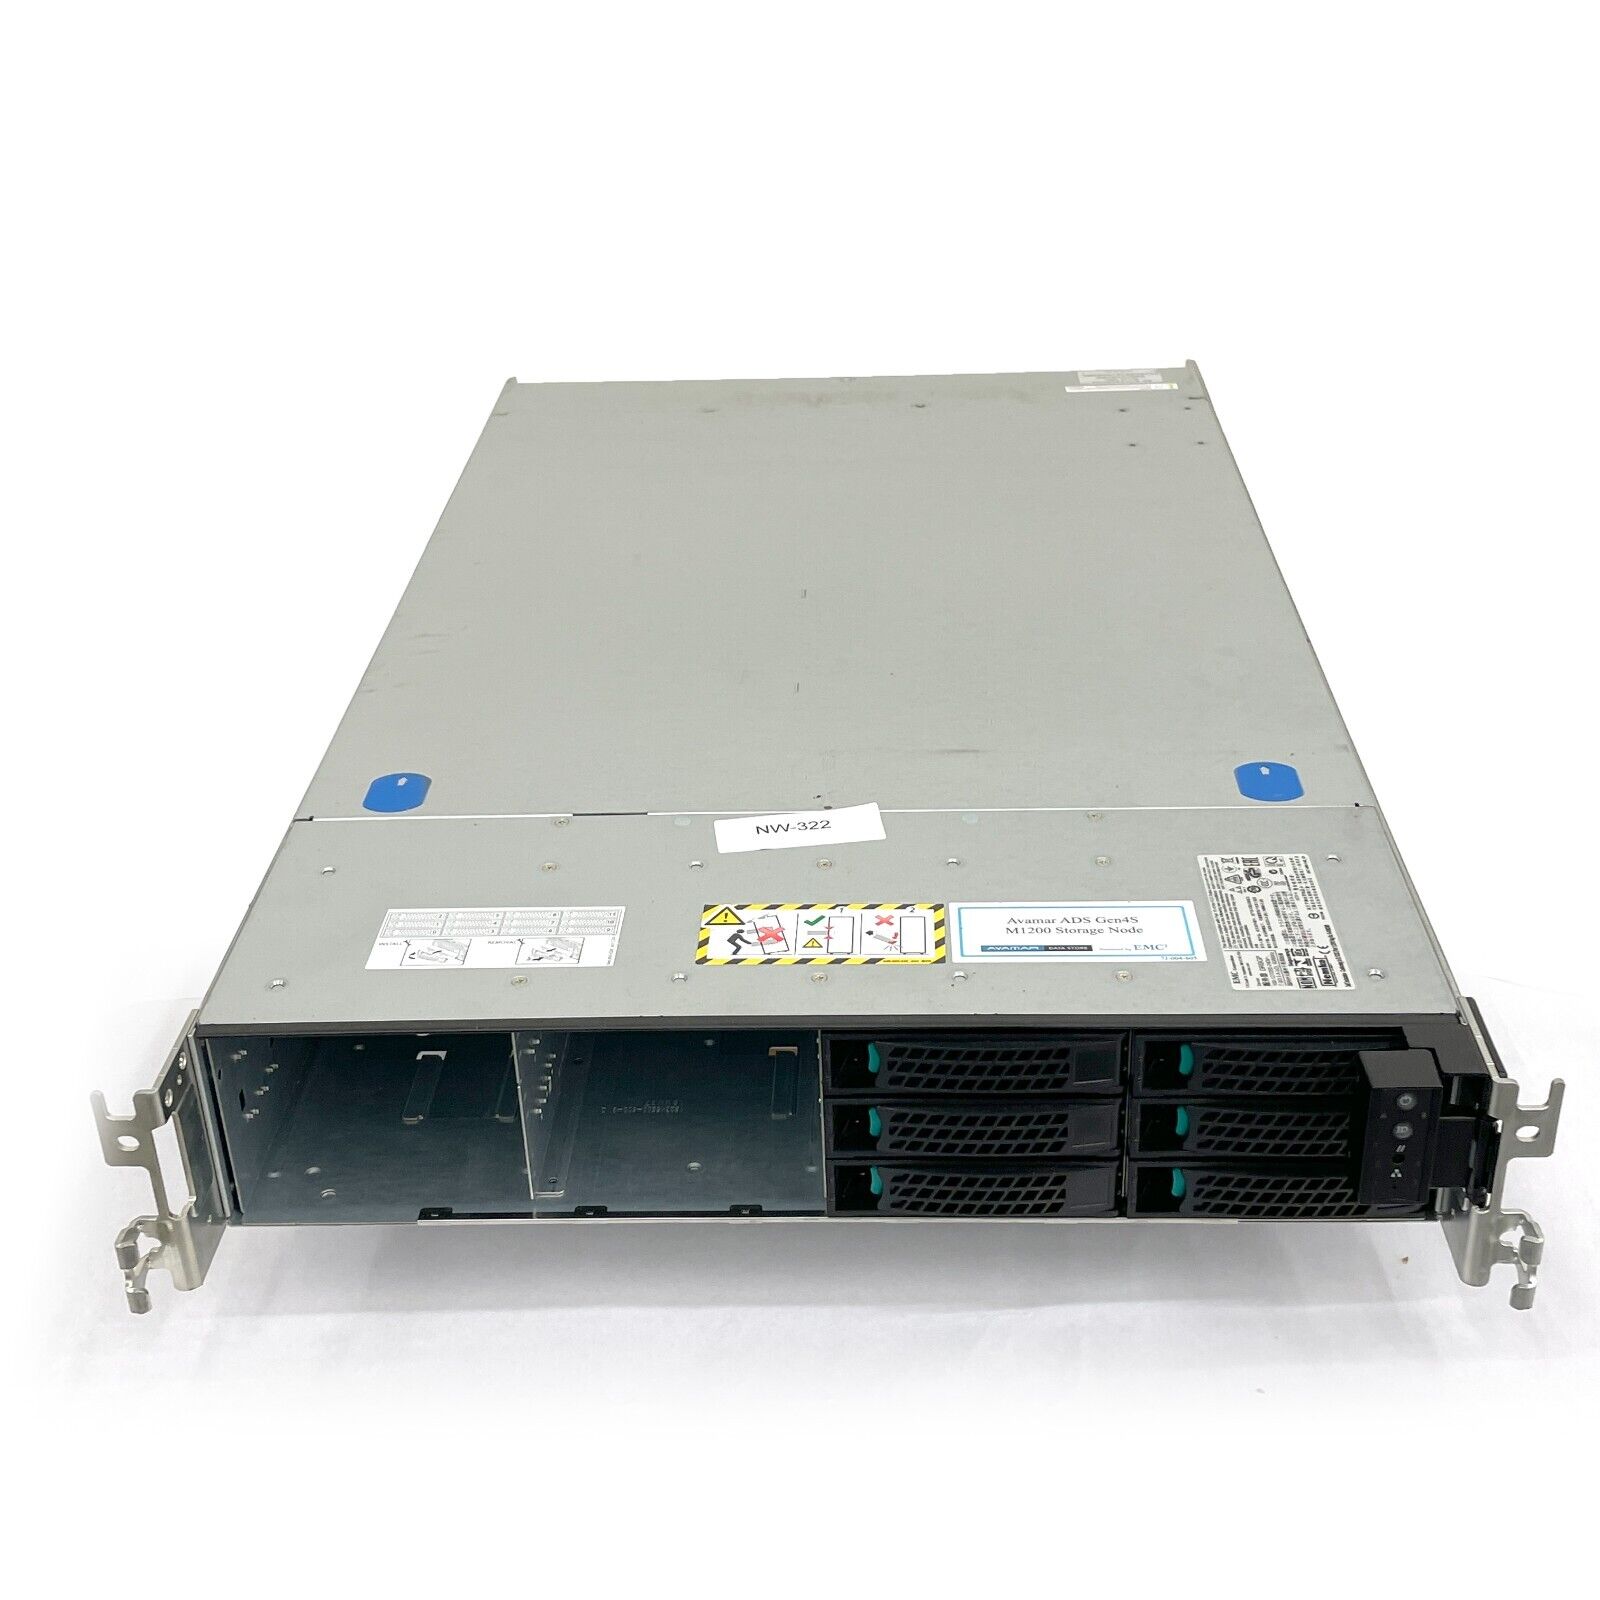 EMC DRBGP Avamar ADS Gen4S M1200 Storage Node Assembly, 12-Bay SATA, No Drives